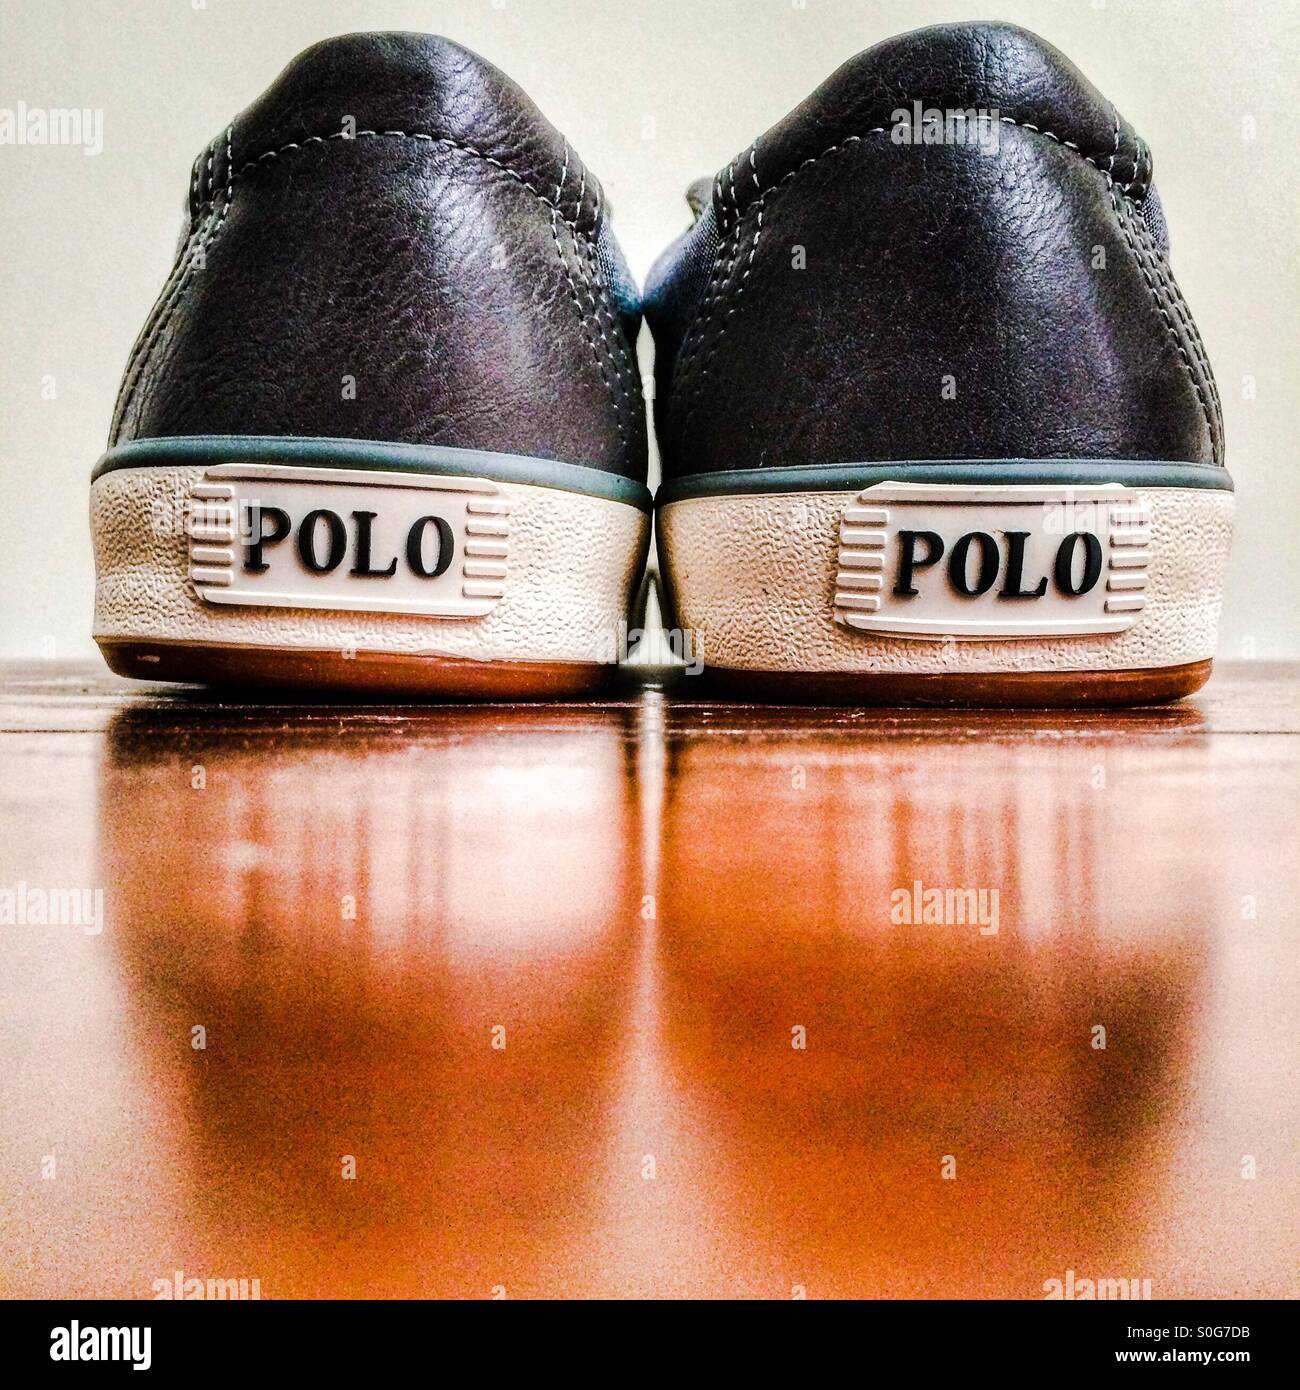 Polo Ralph Lauren shoes rear view Stock Photo - Alamy